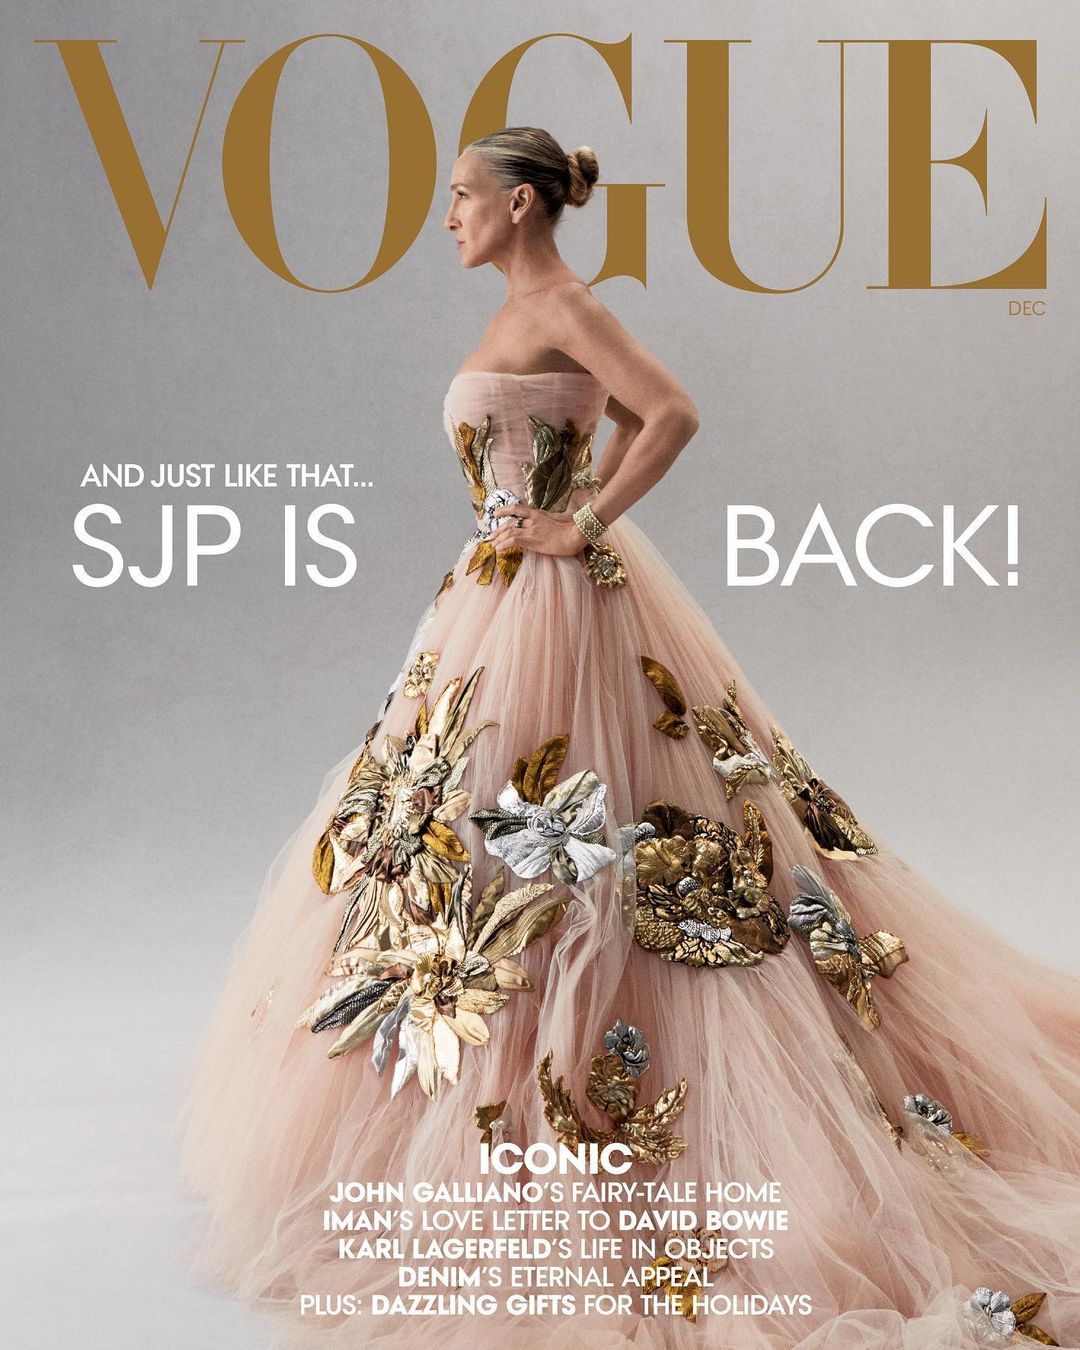 Сара Джессика Паркер украсила обложку журнала Vogue